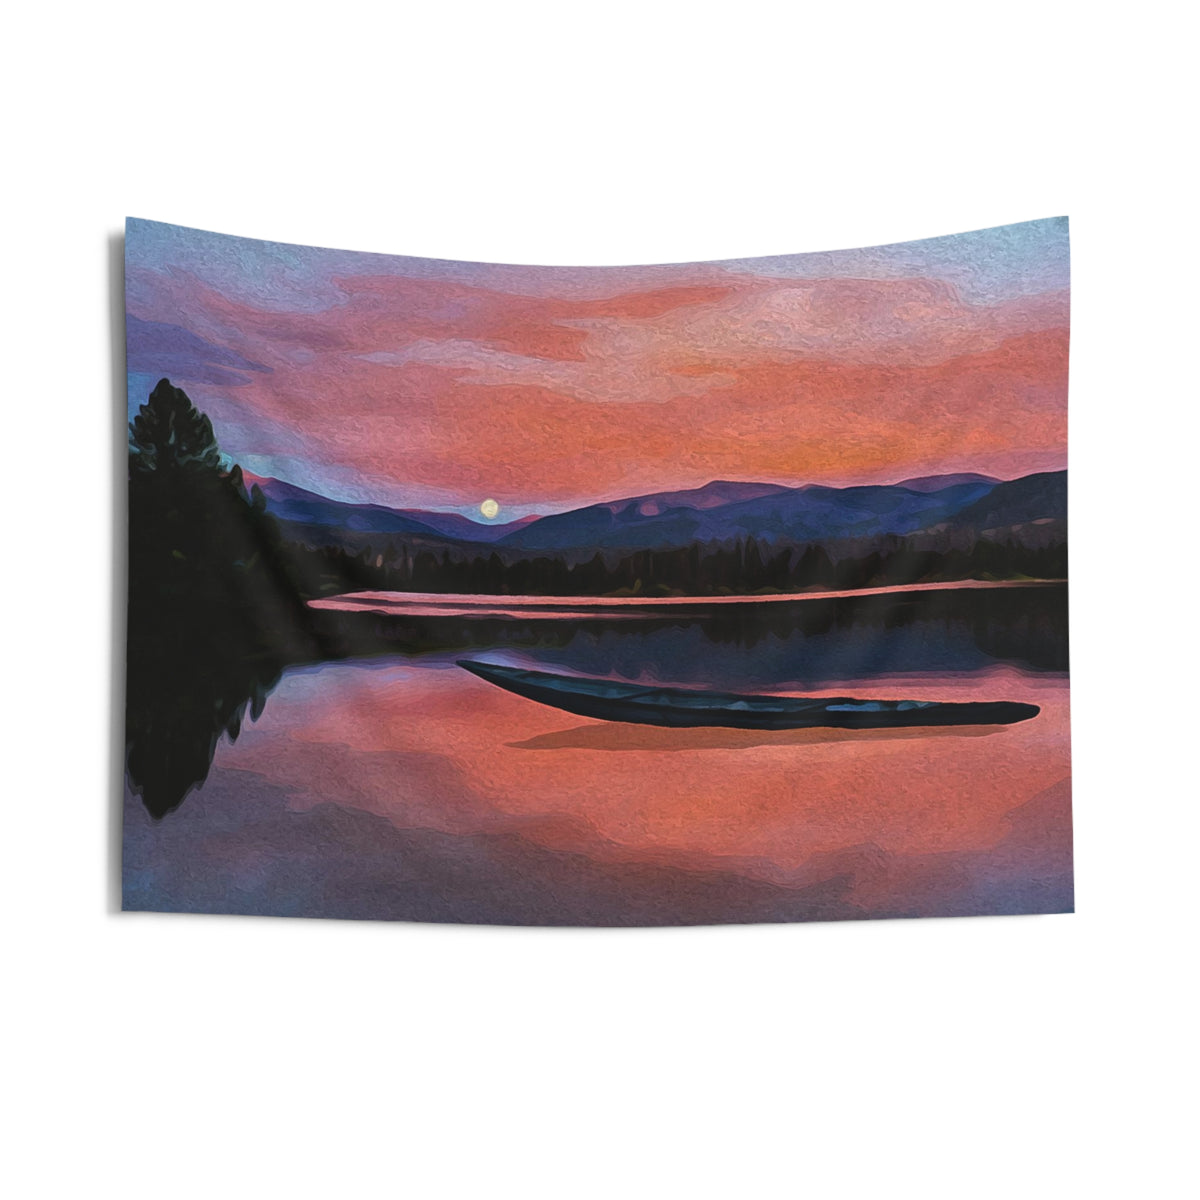 Sunset Lake Tapestry